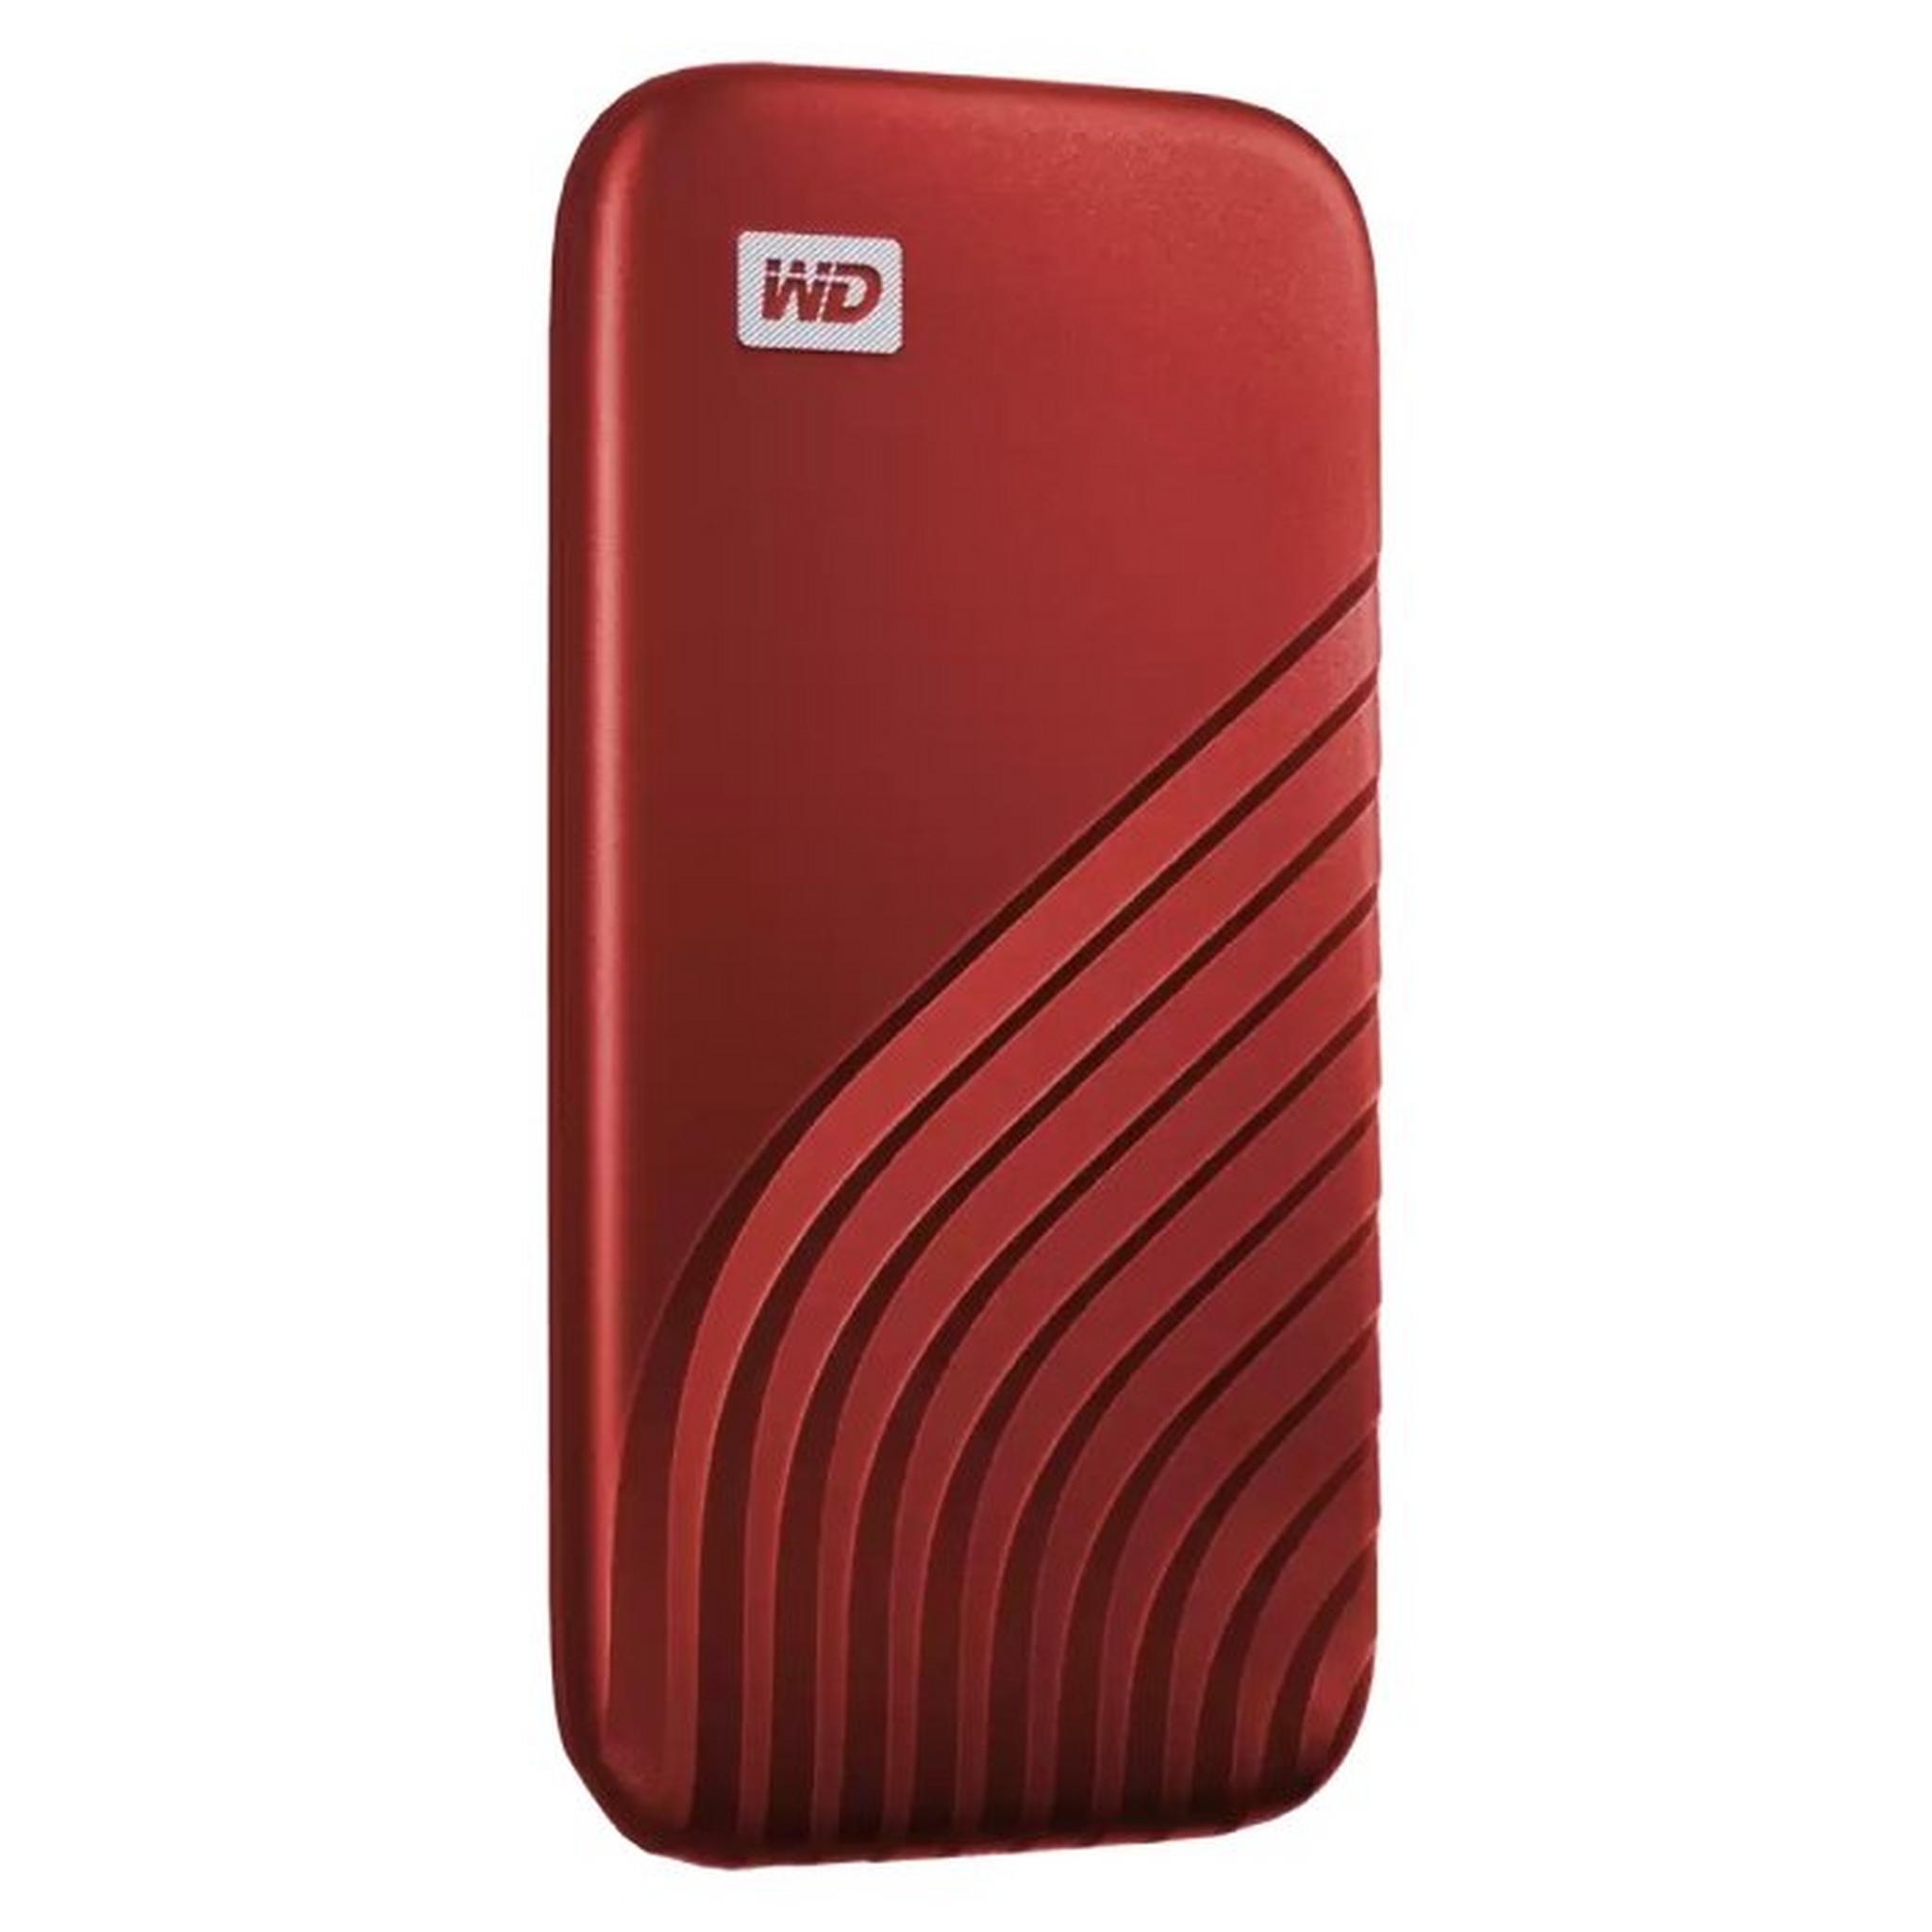 WD 2TB My Passport Portable External Hard Drive SSD (WDBAGF0020BRD-WESN) -  Red